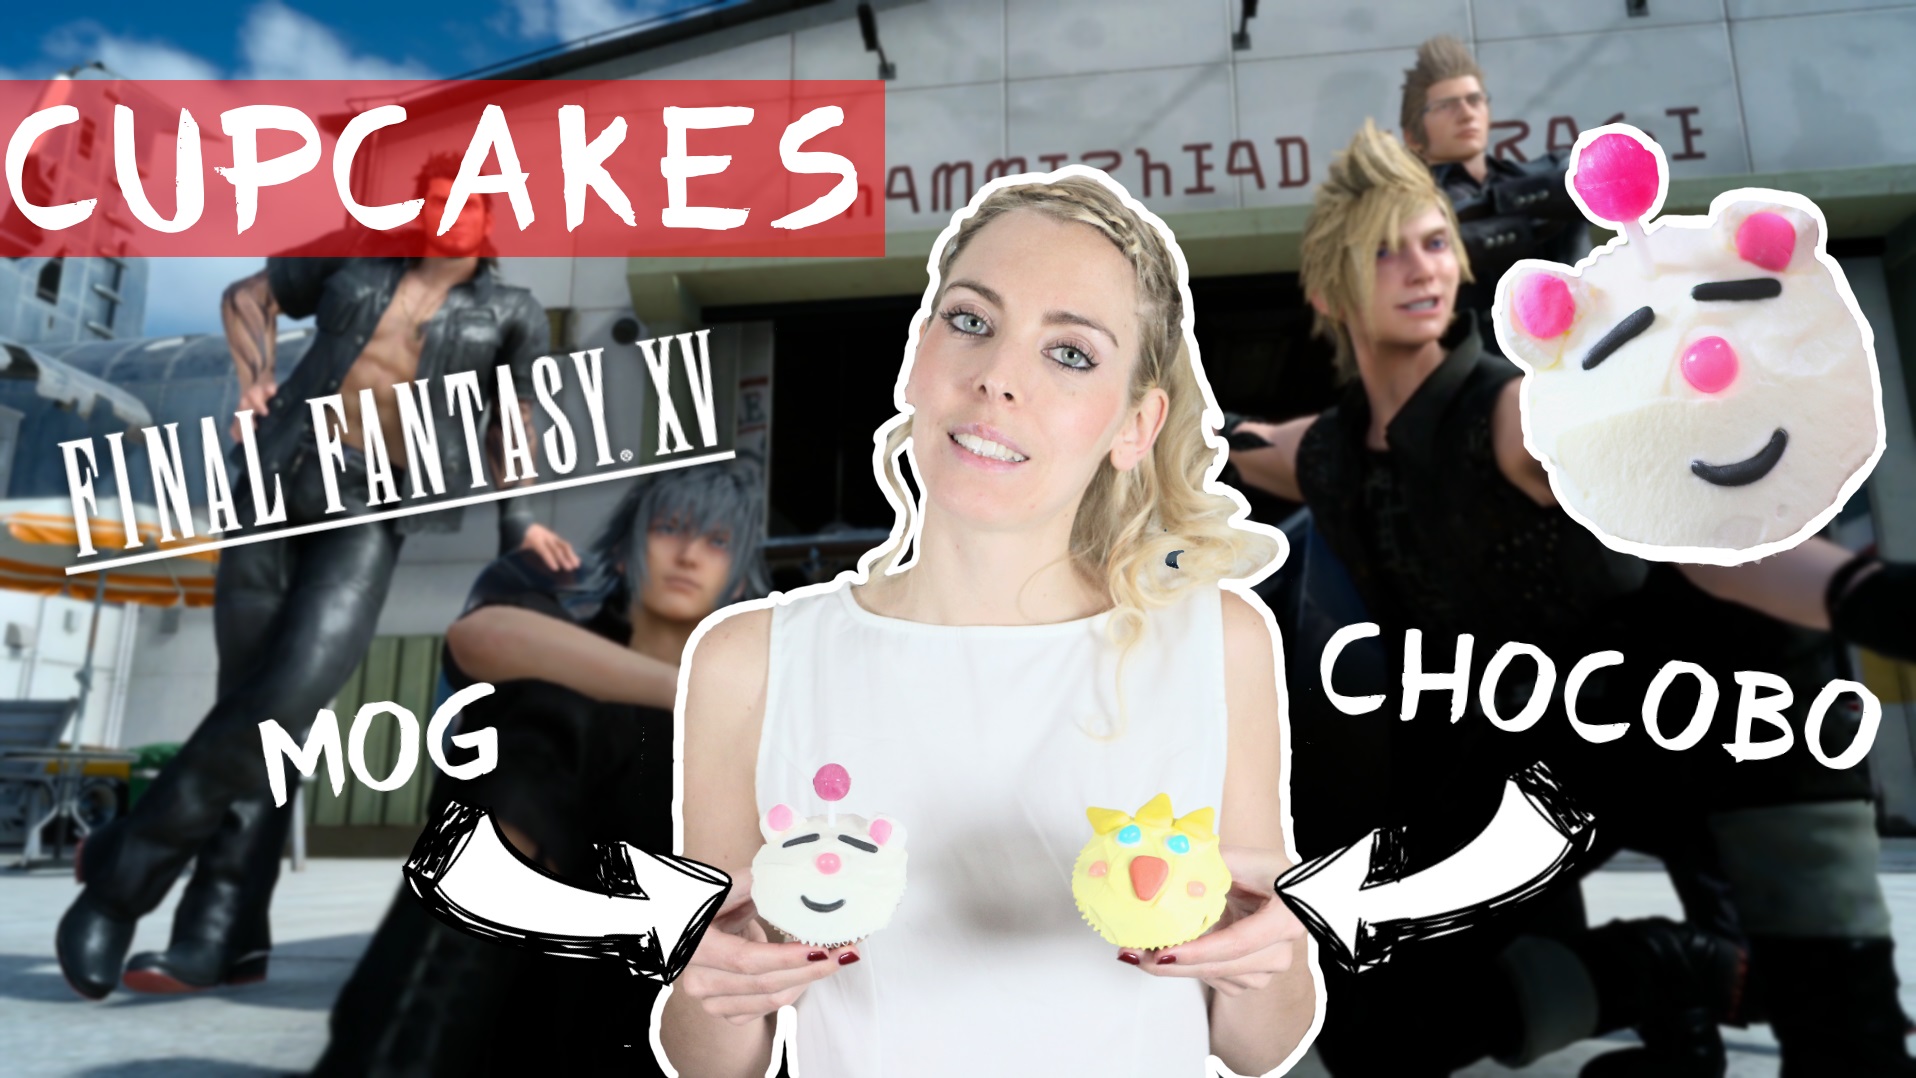 Recette cupcakes Final Fantasy XV : Chocobos et mogs